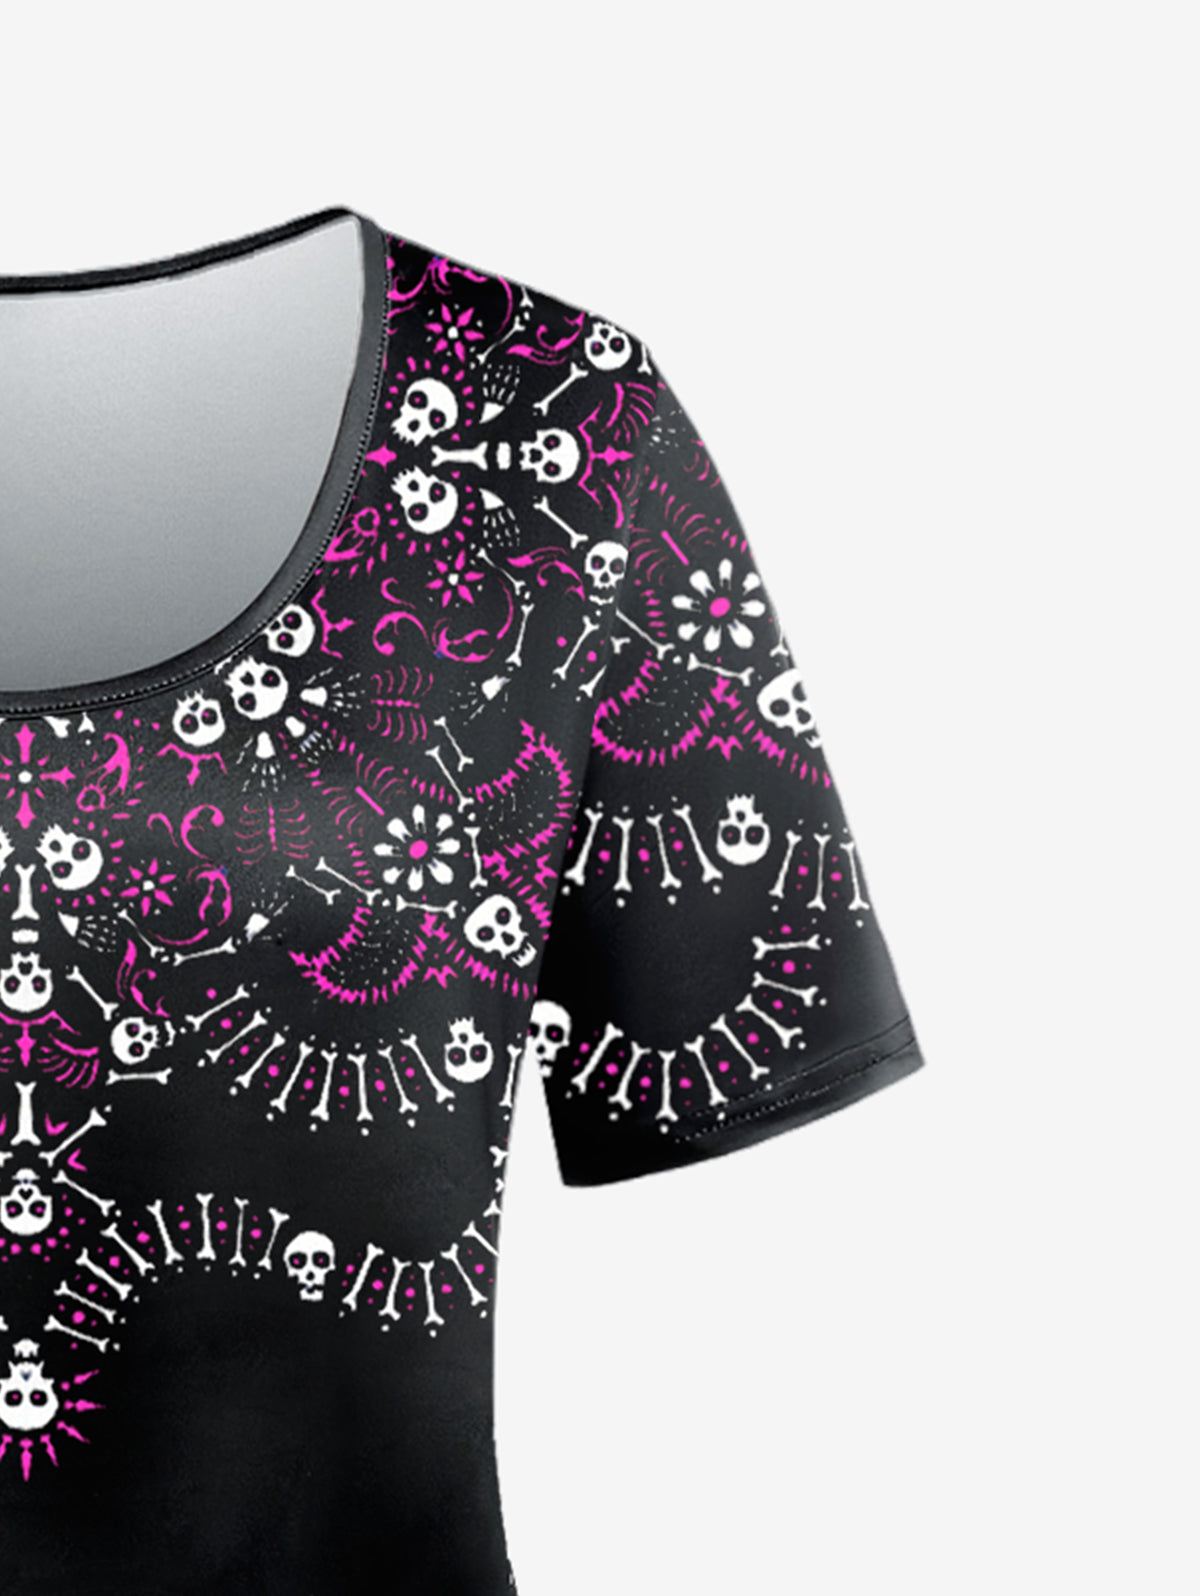 Gothic Skull Skeleton Print T-shirt